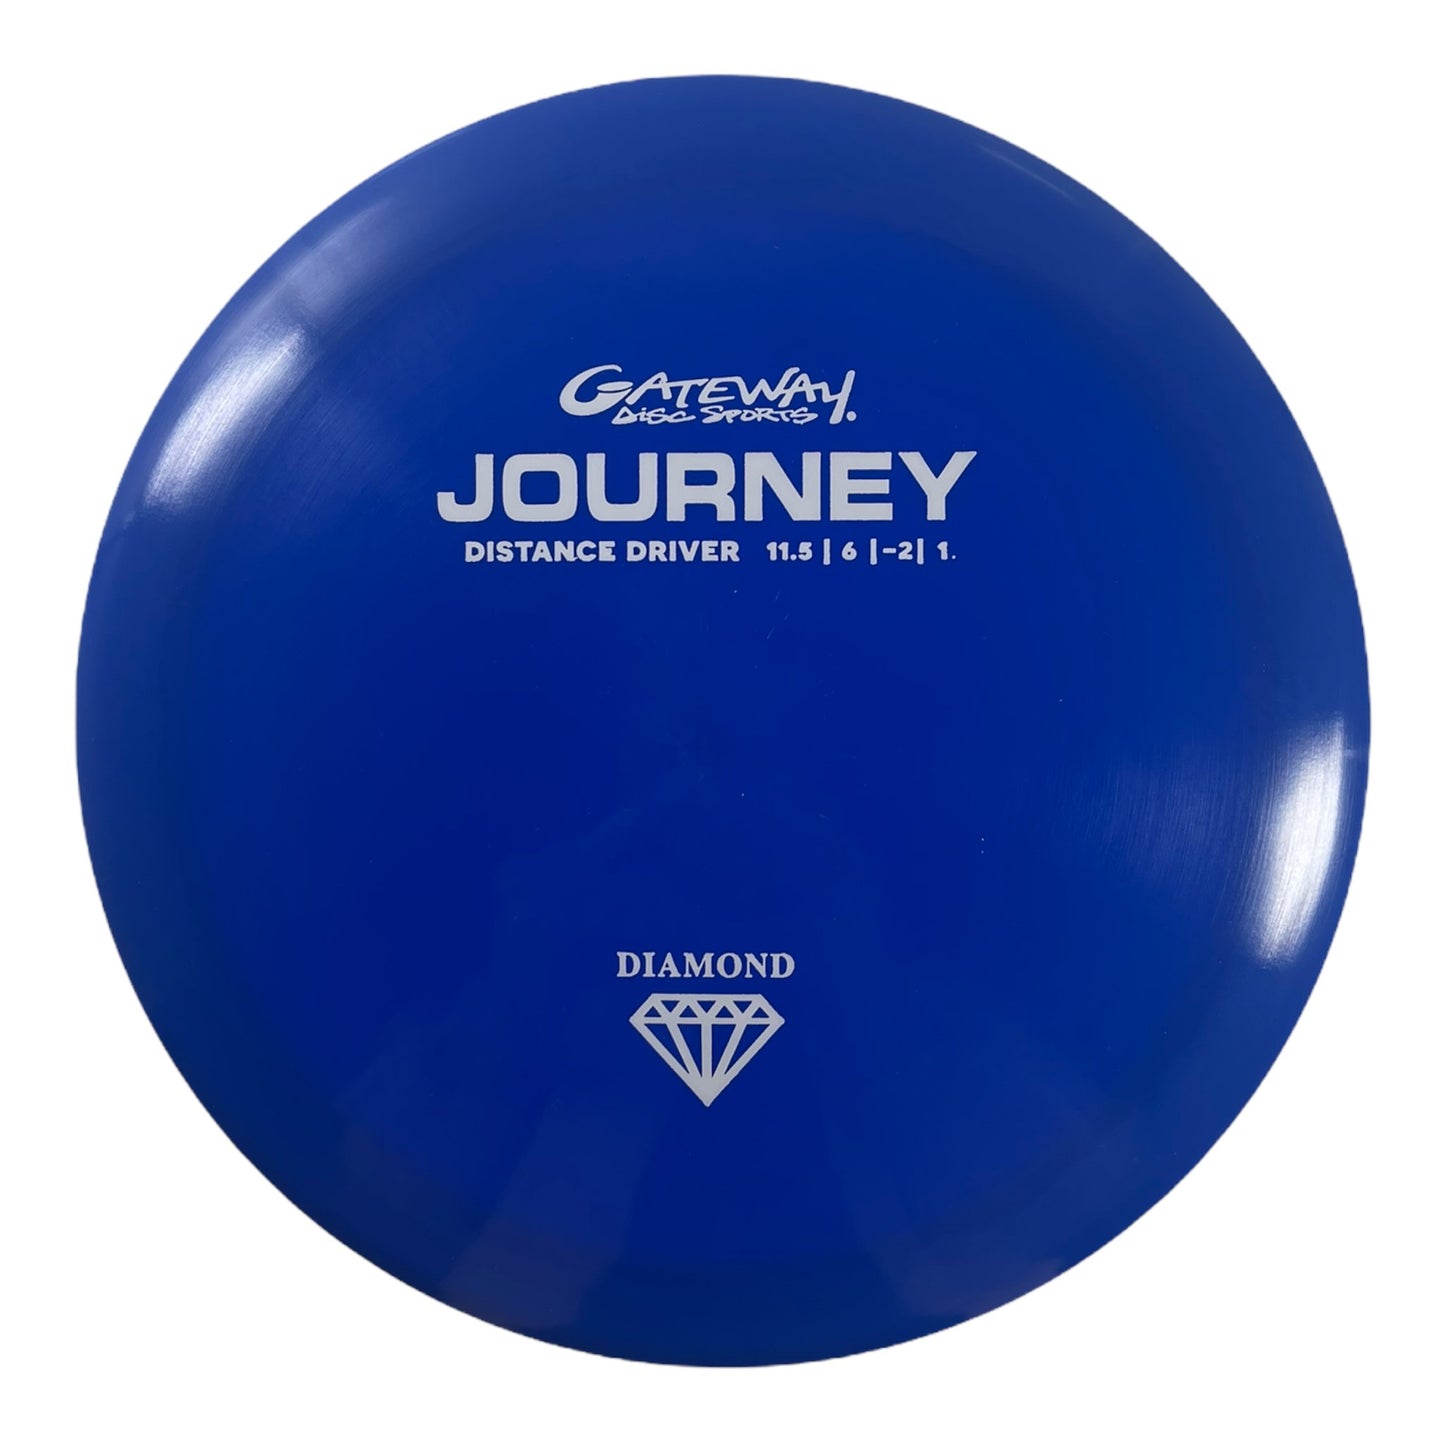 Gateway Disc Sports Journey | Diamond | Blue/White 176g Disc Golf